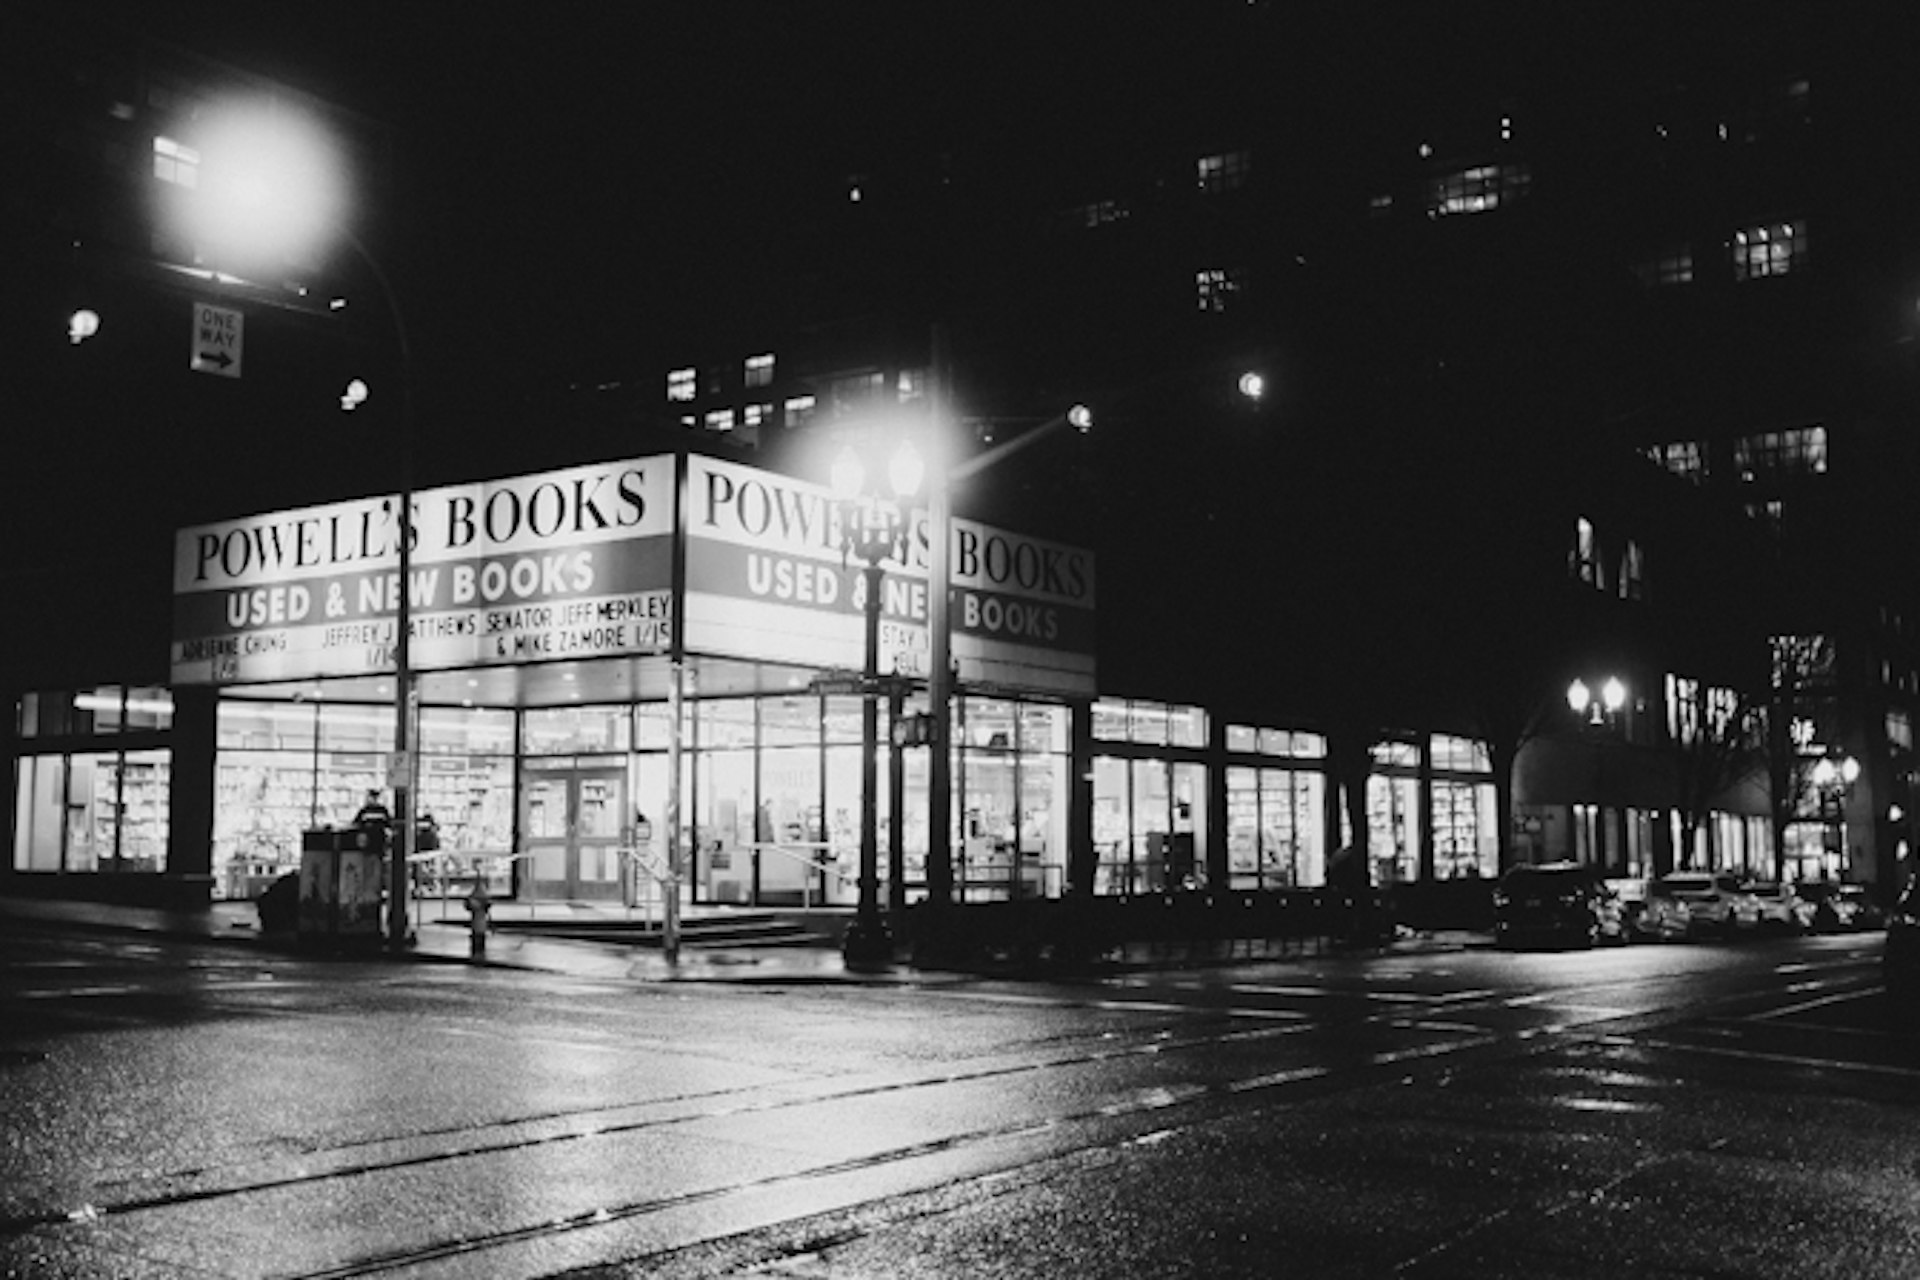 Powell's bookstore